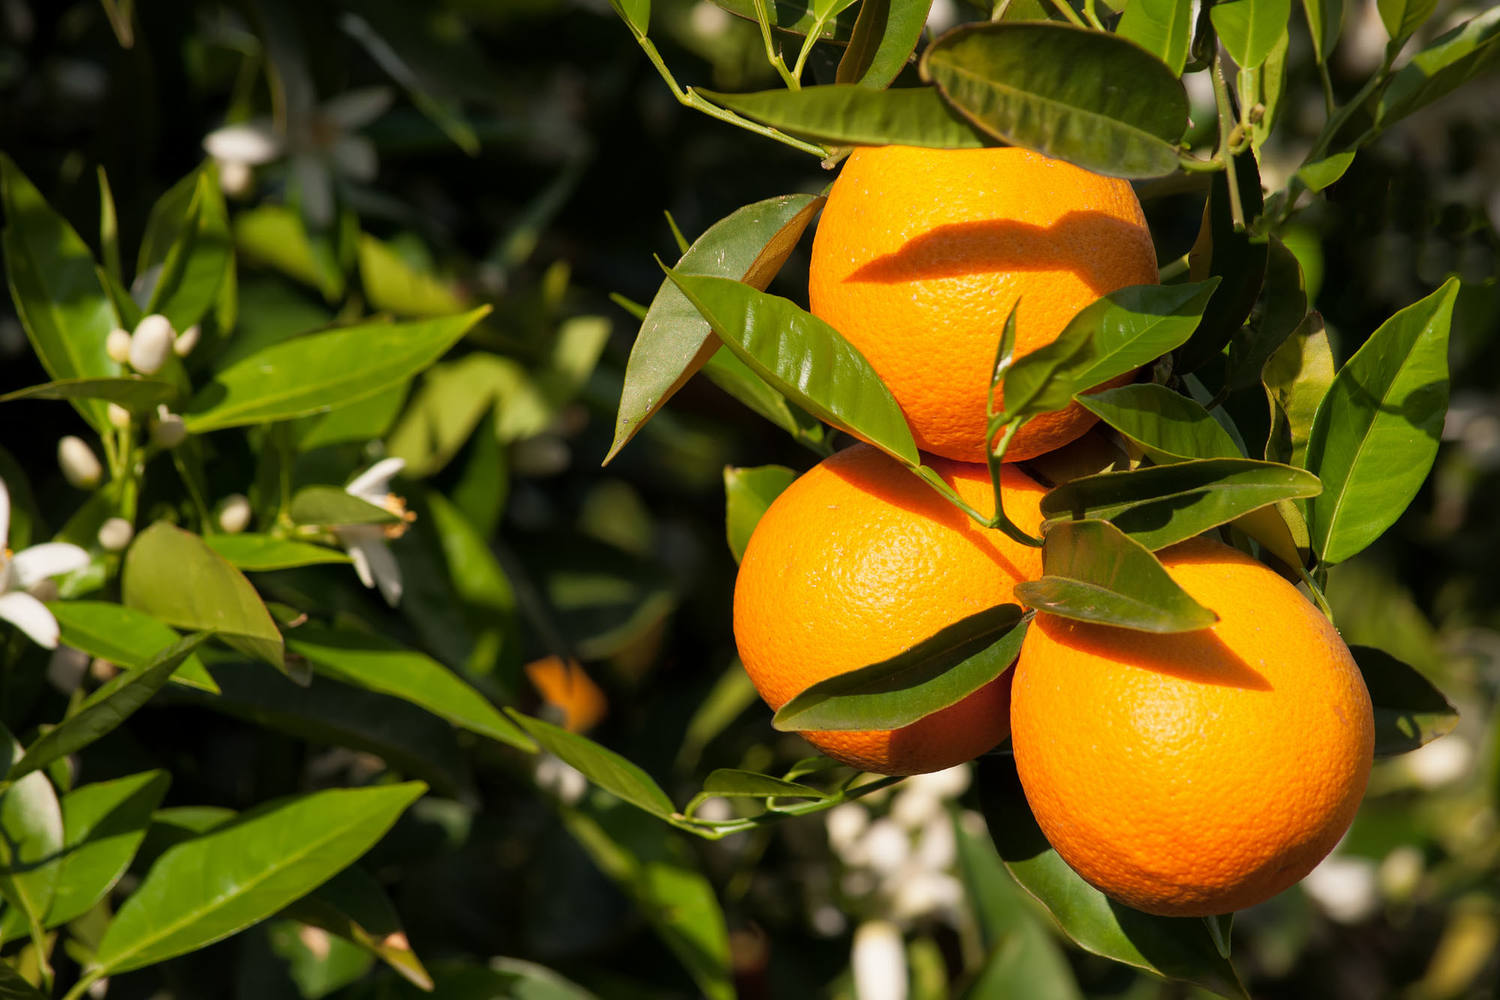 Perssinaasappels middel verpakt 10st stuk 3